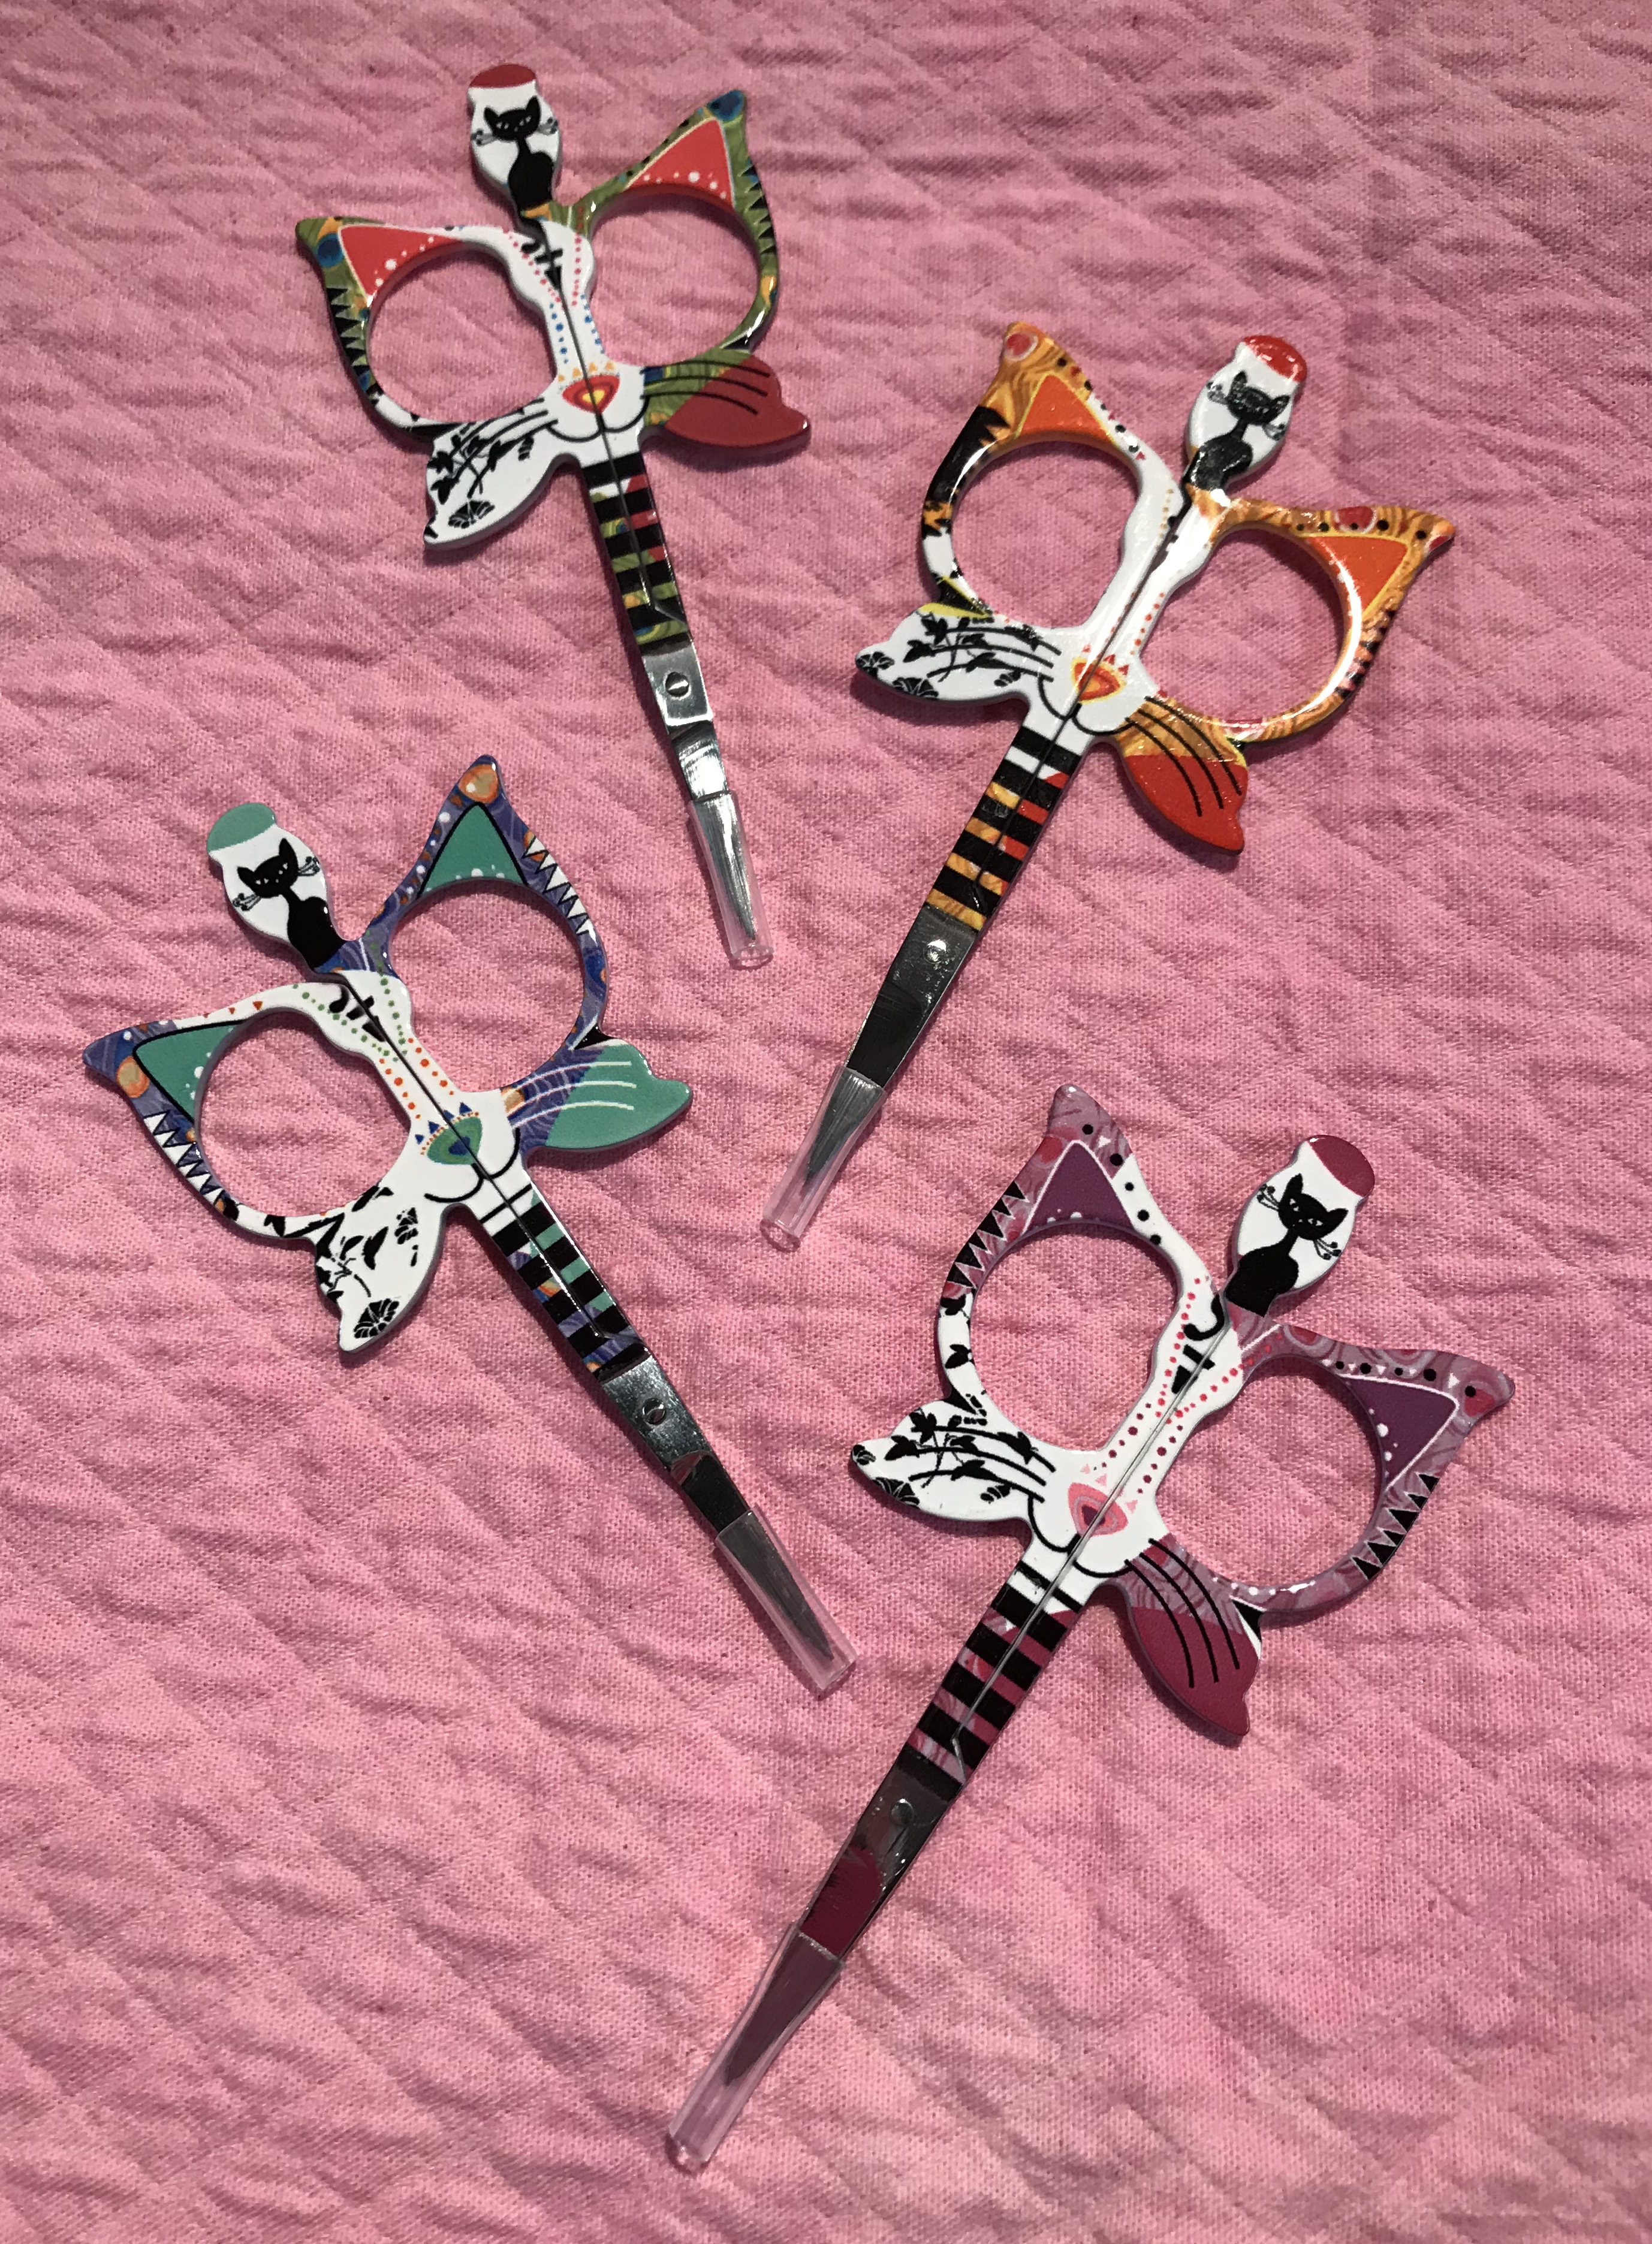 Cat scissors for use alongside our QuilTak quilt basting tools